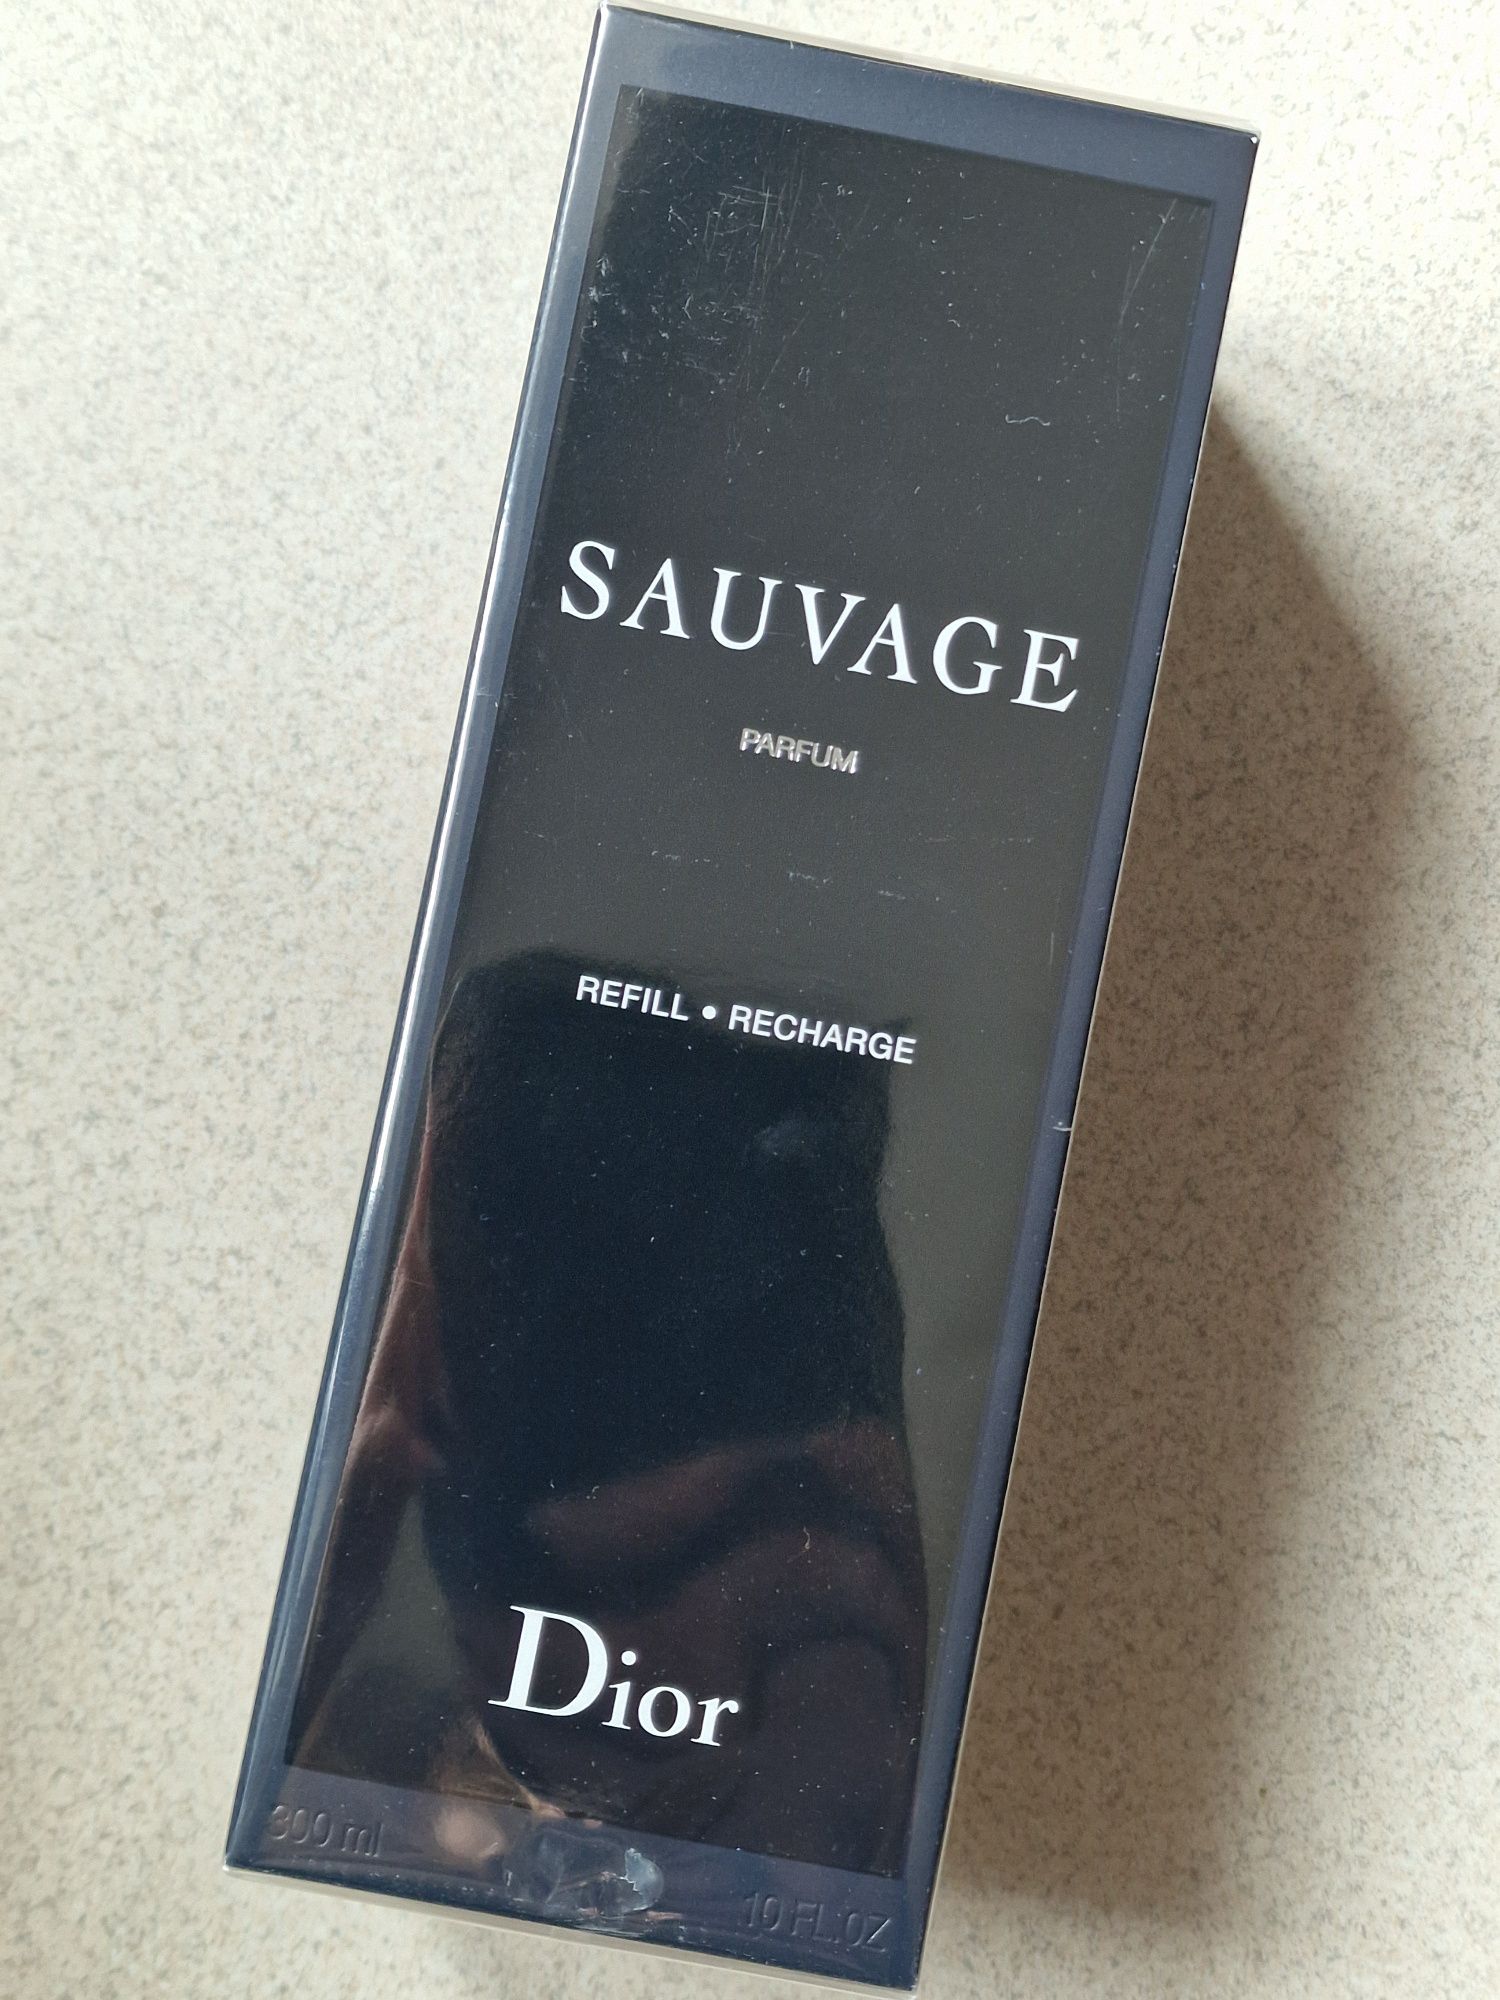 Dior Sauvage Parfum refill